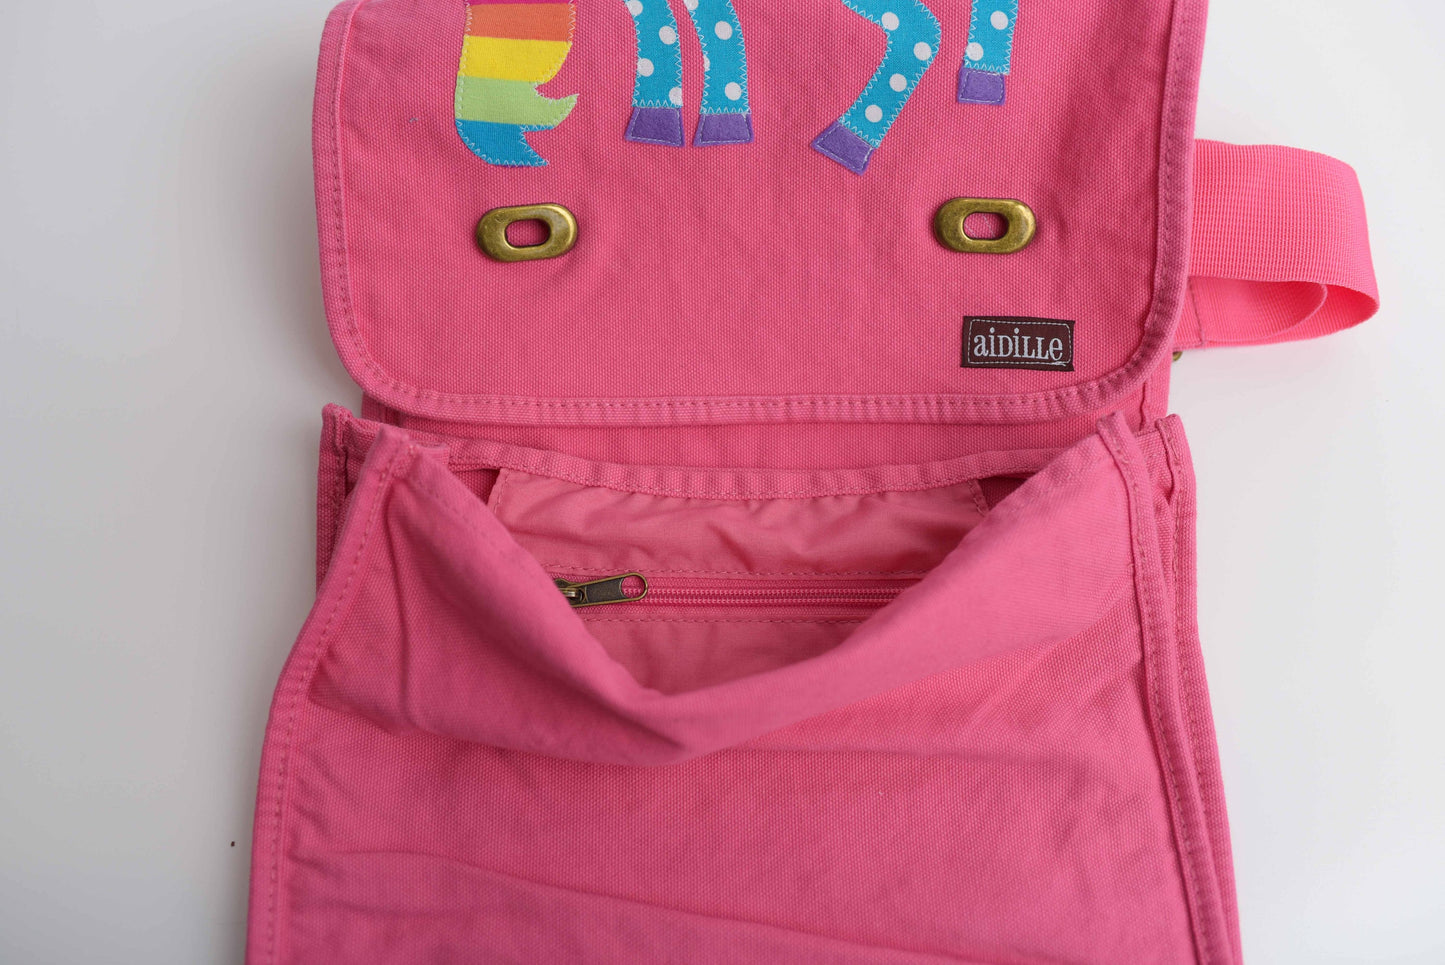 Applique Rainbow Unicorn Messenger Bag